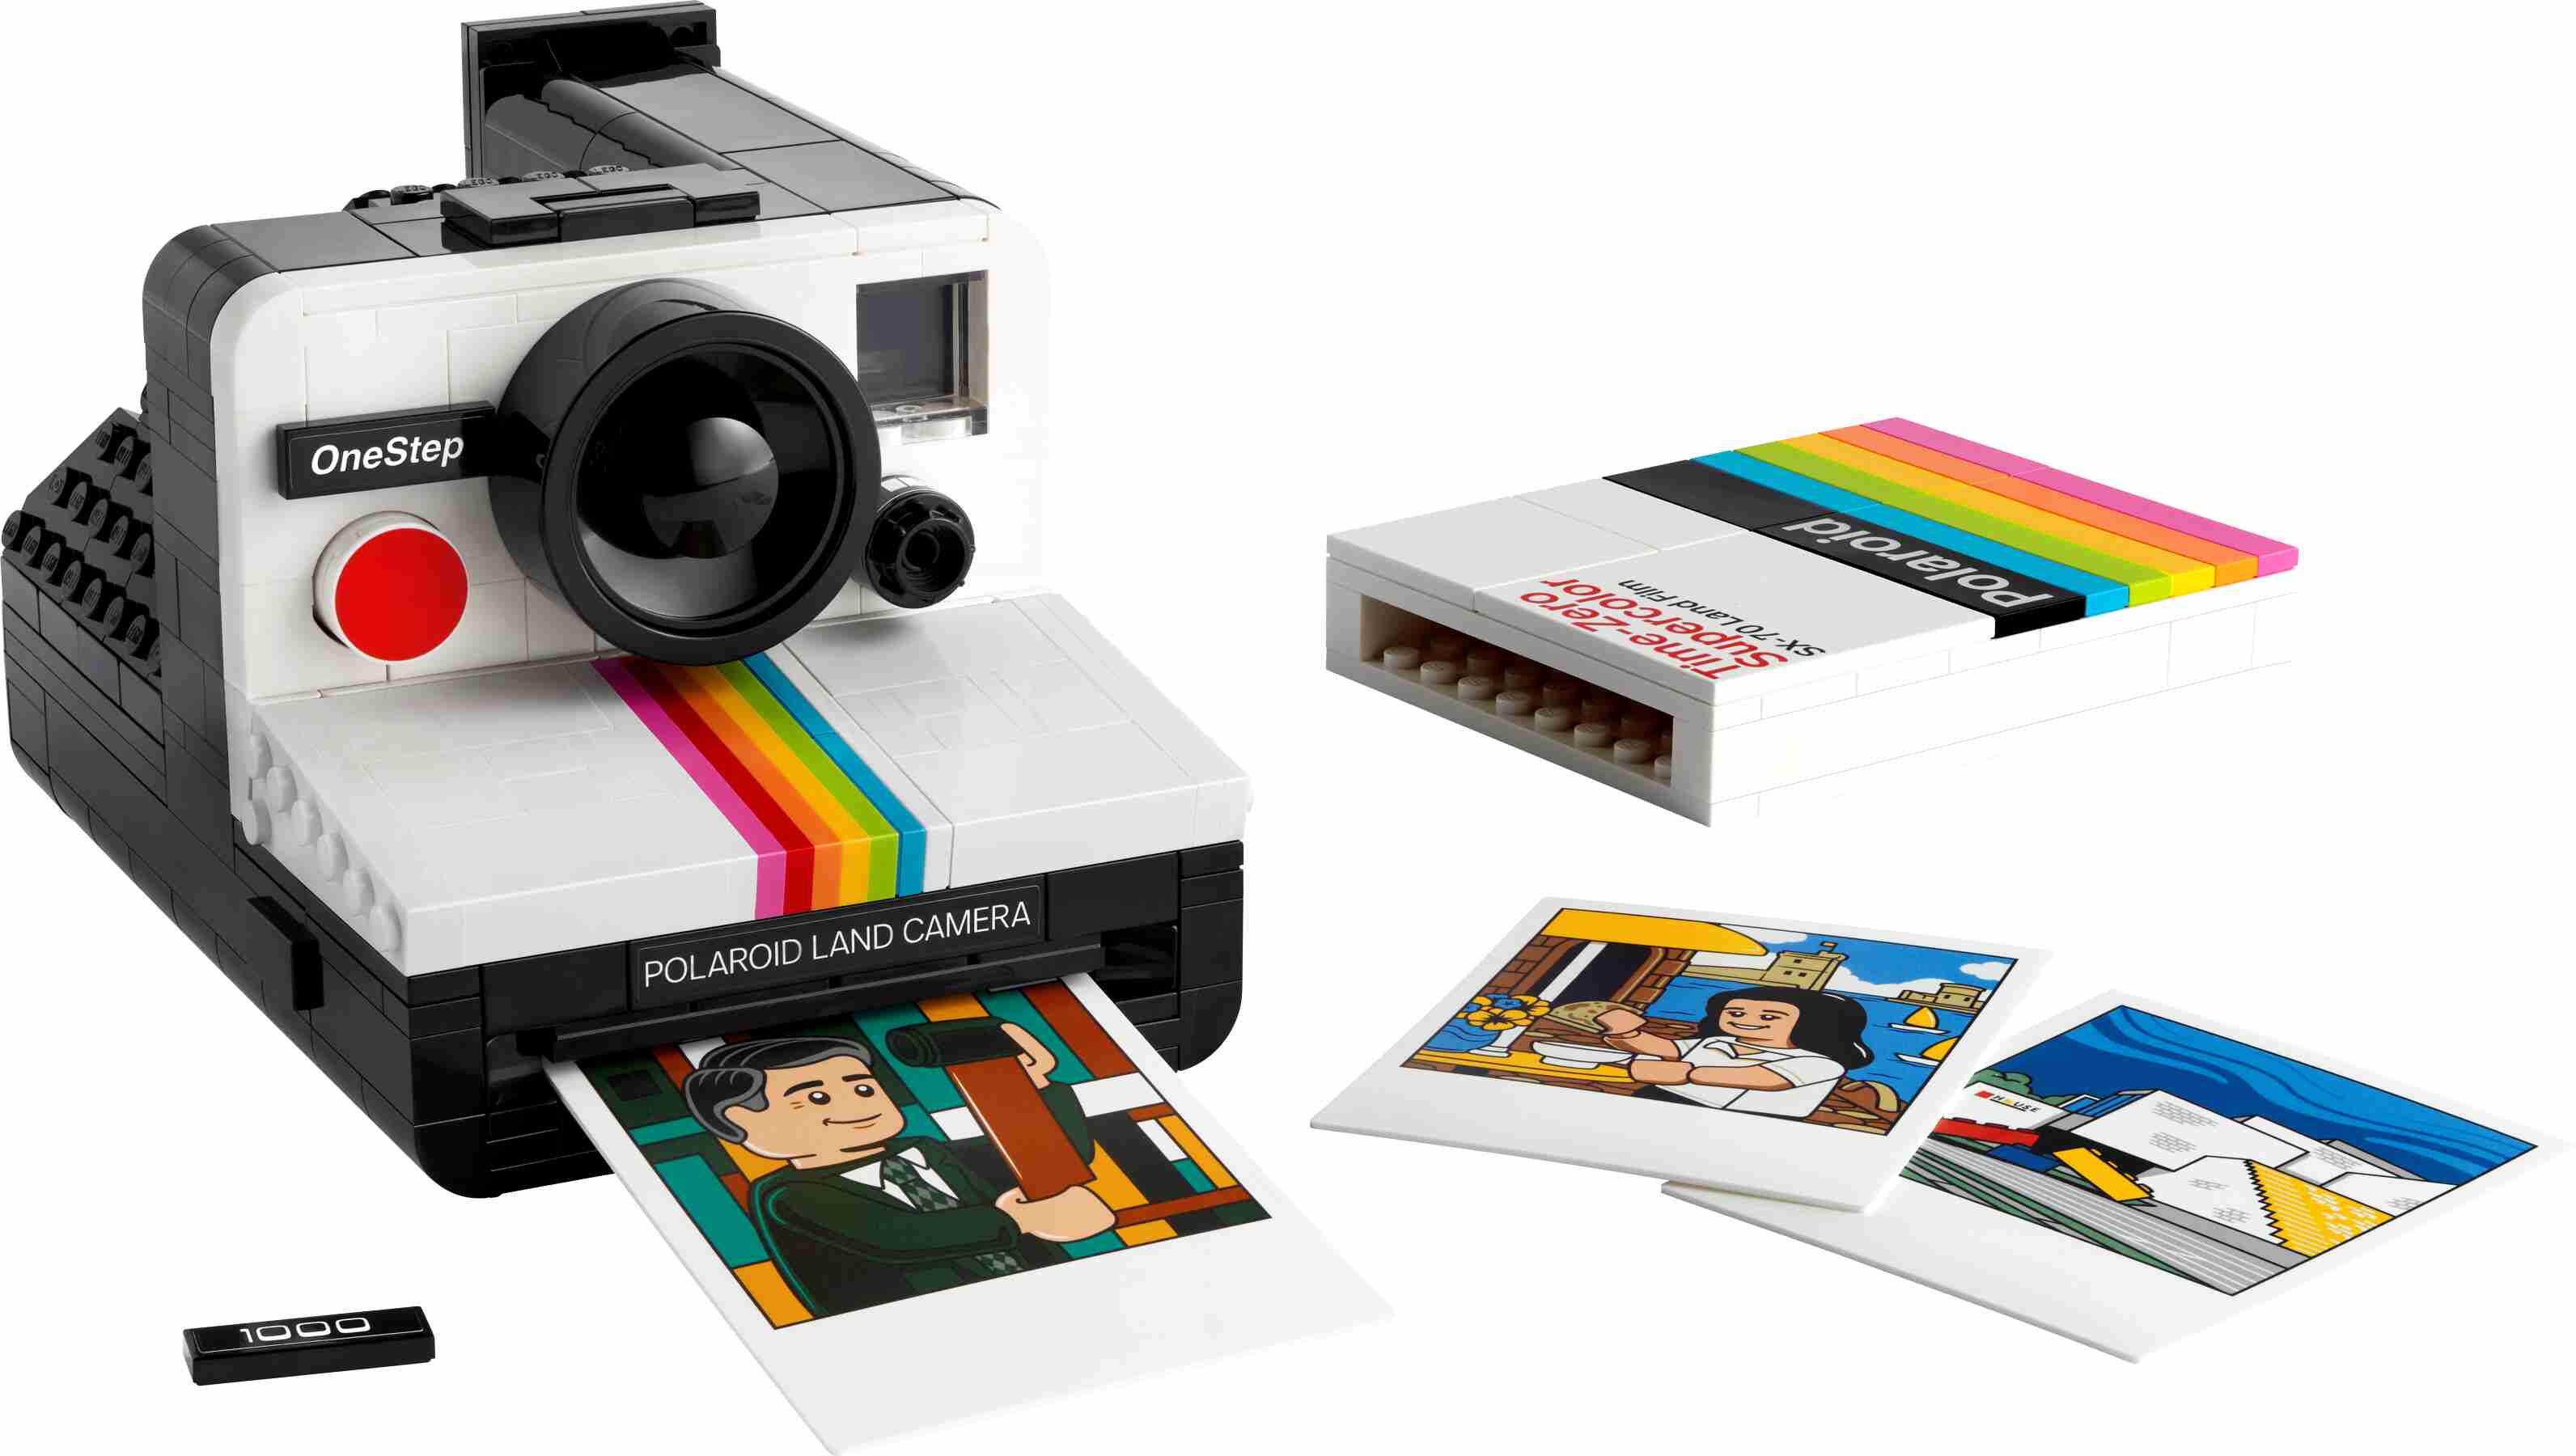 LEGO Ideas Polaroid OneStep SX-70 Sofortbildkamera, Nachbildung, 3 Fotos